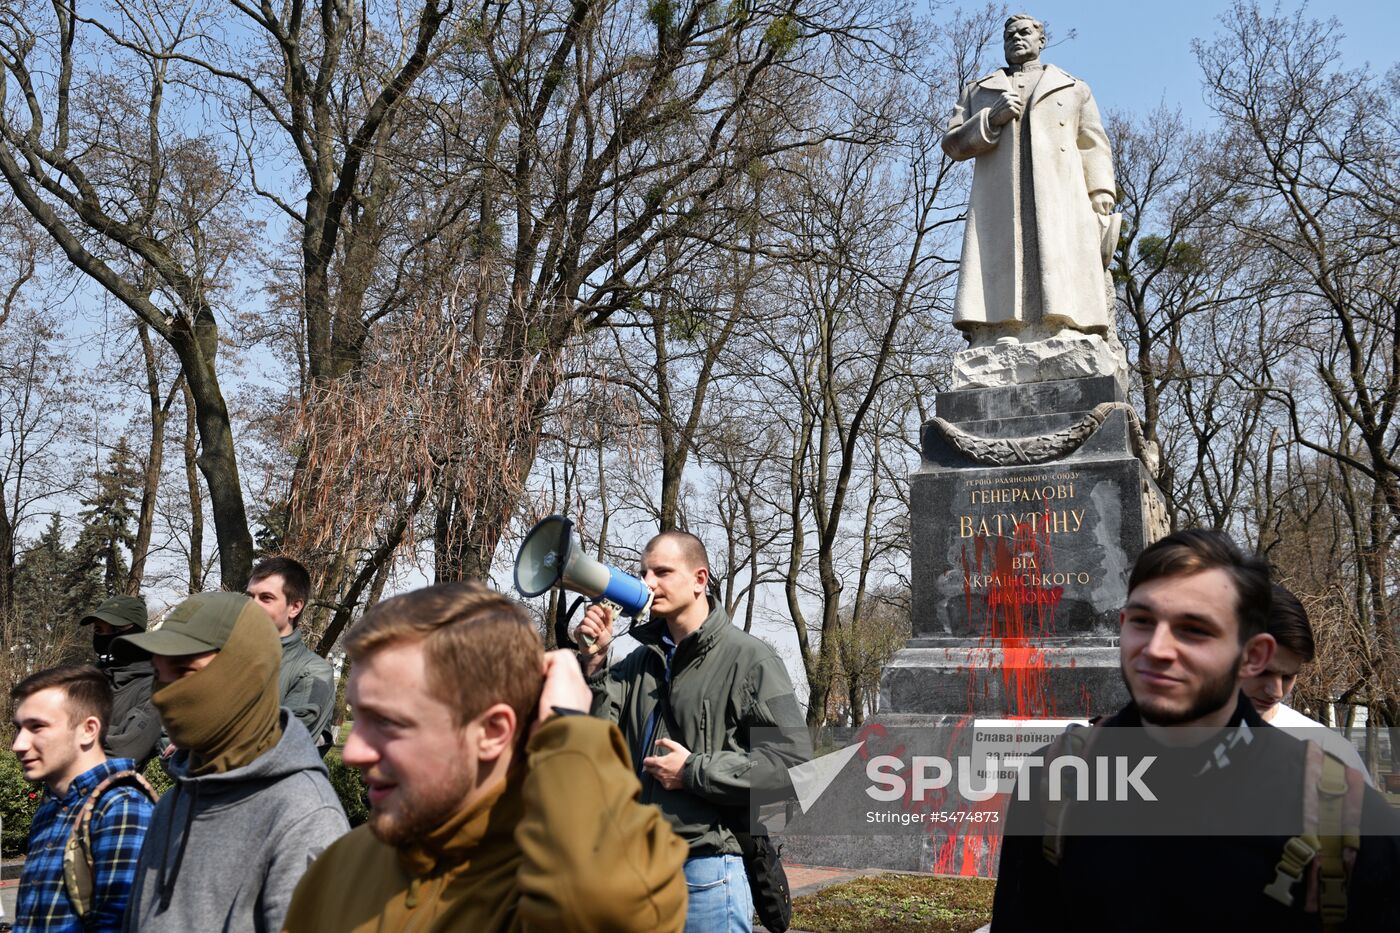 Nationalists from S14 vandalize General Nikolai Vatutin monument in Kiev